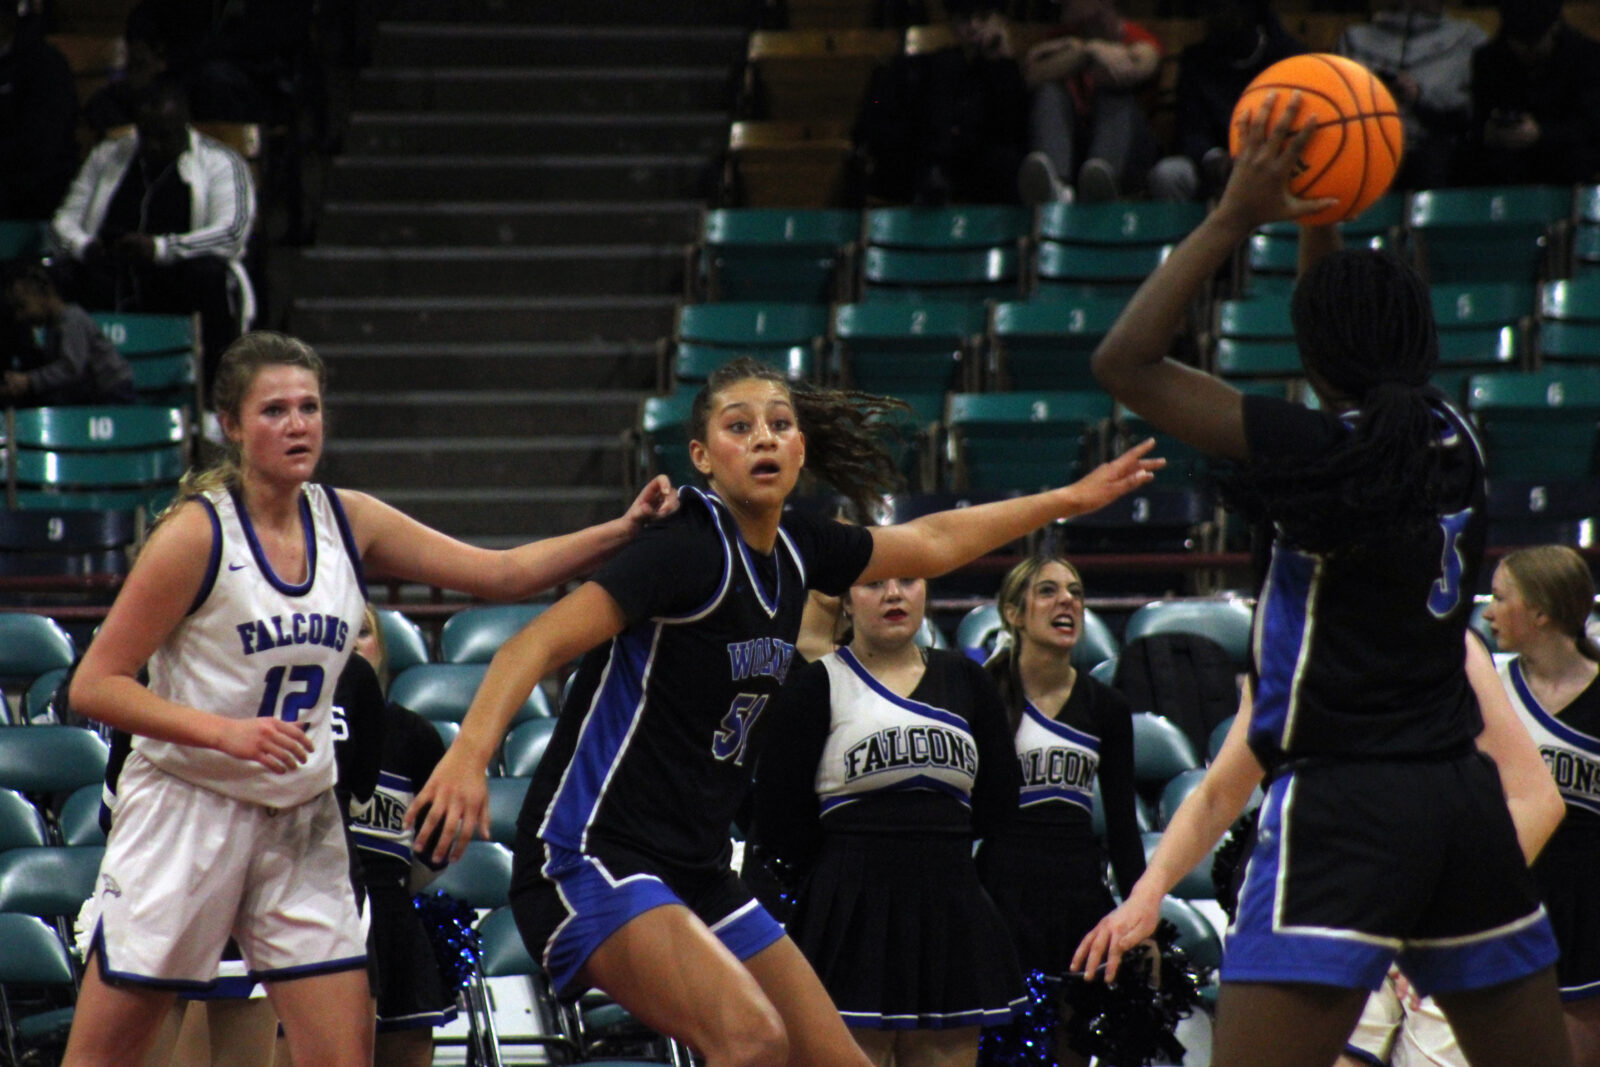 Sienna Betts, Colorado's next girls basketball star, takes